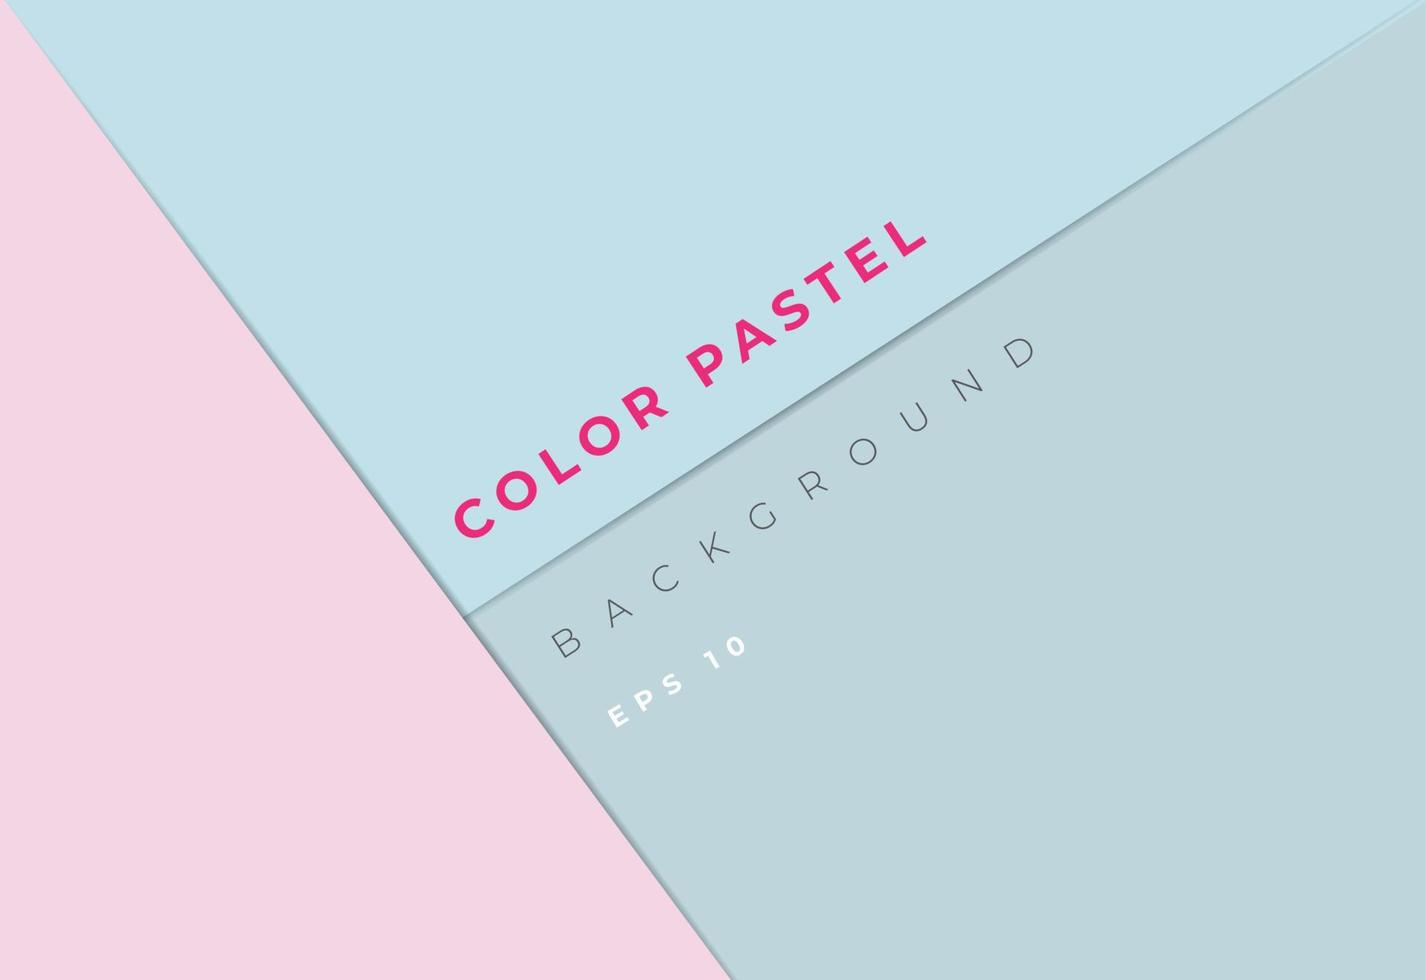 Blue and pink color pastel background . vector ilustration